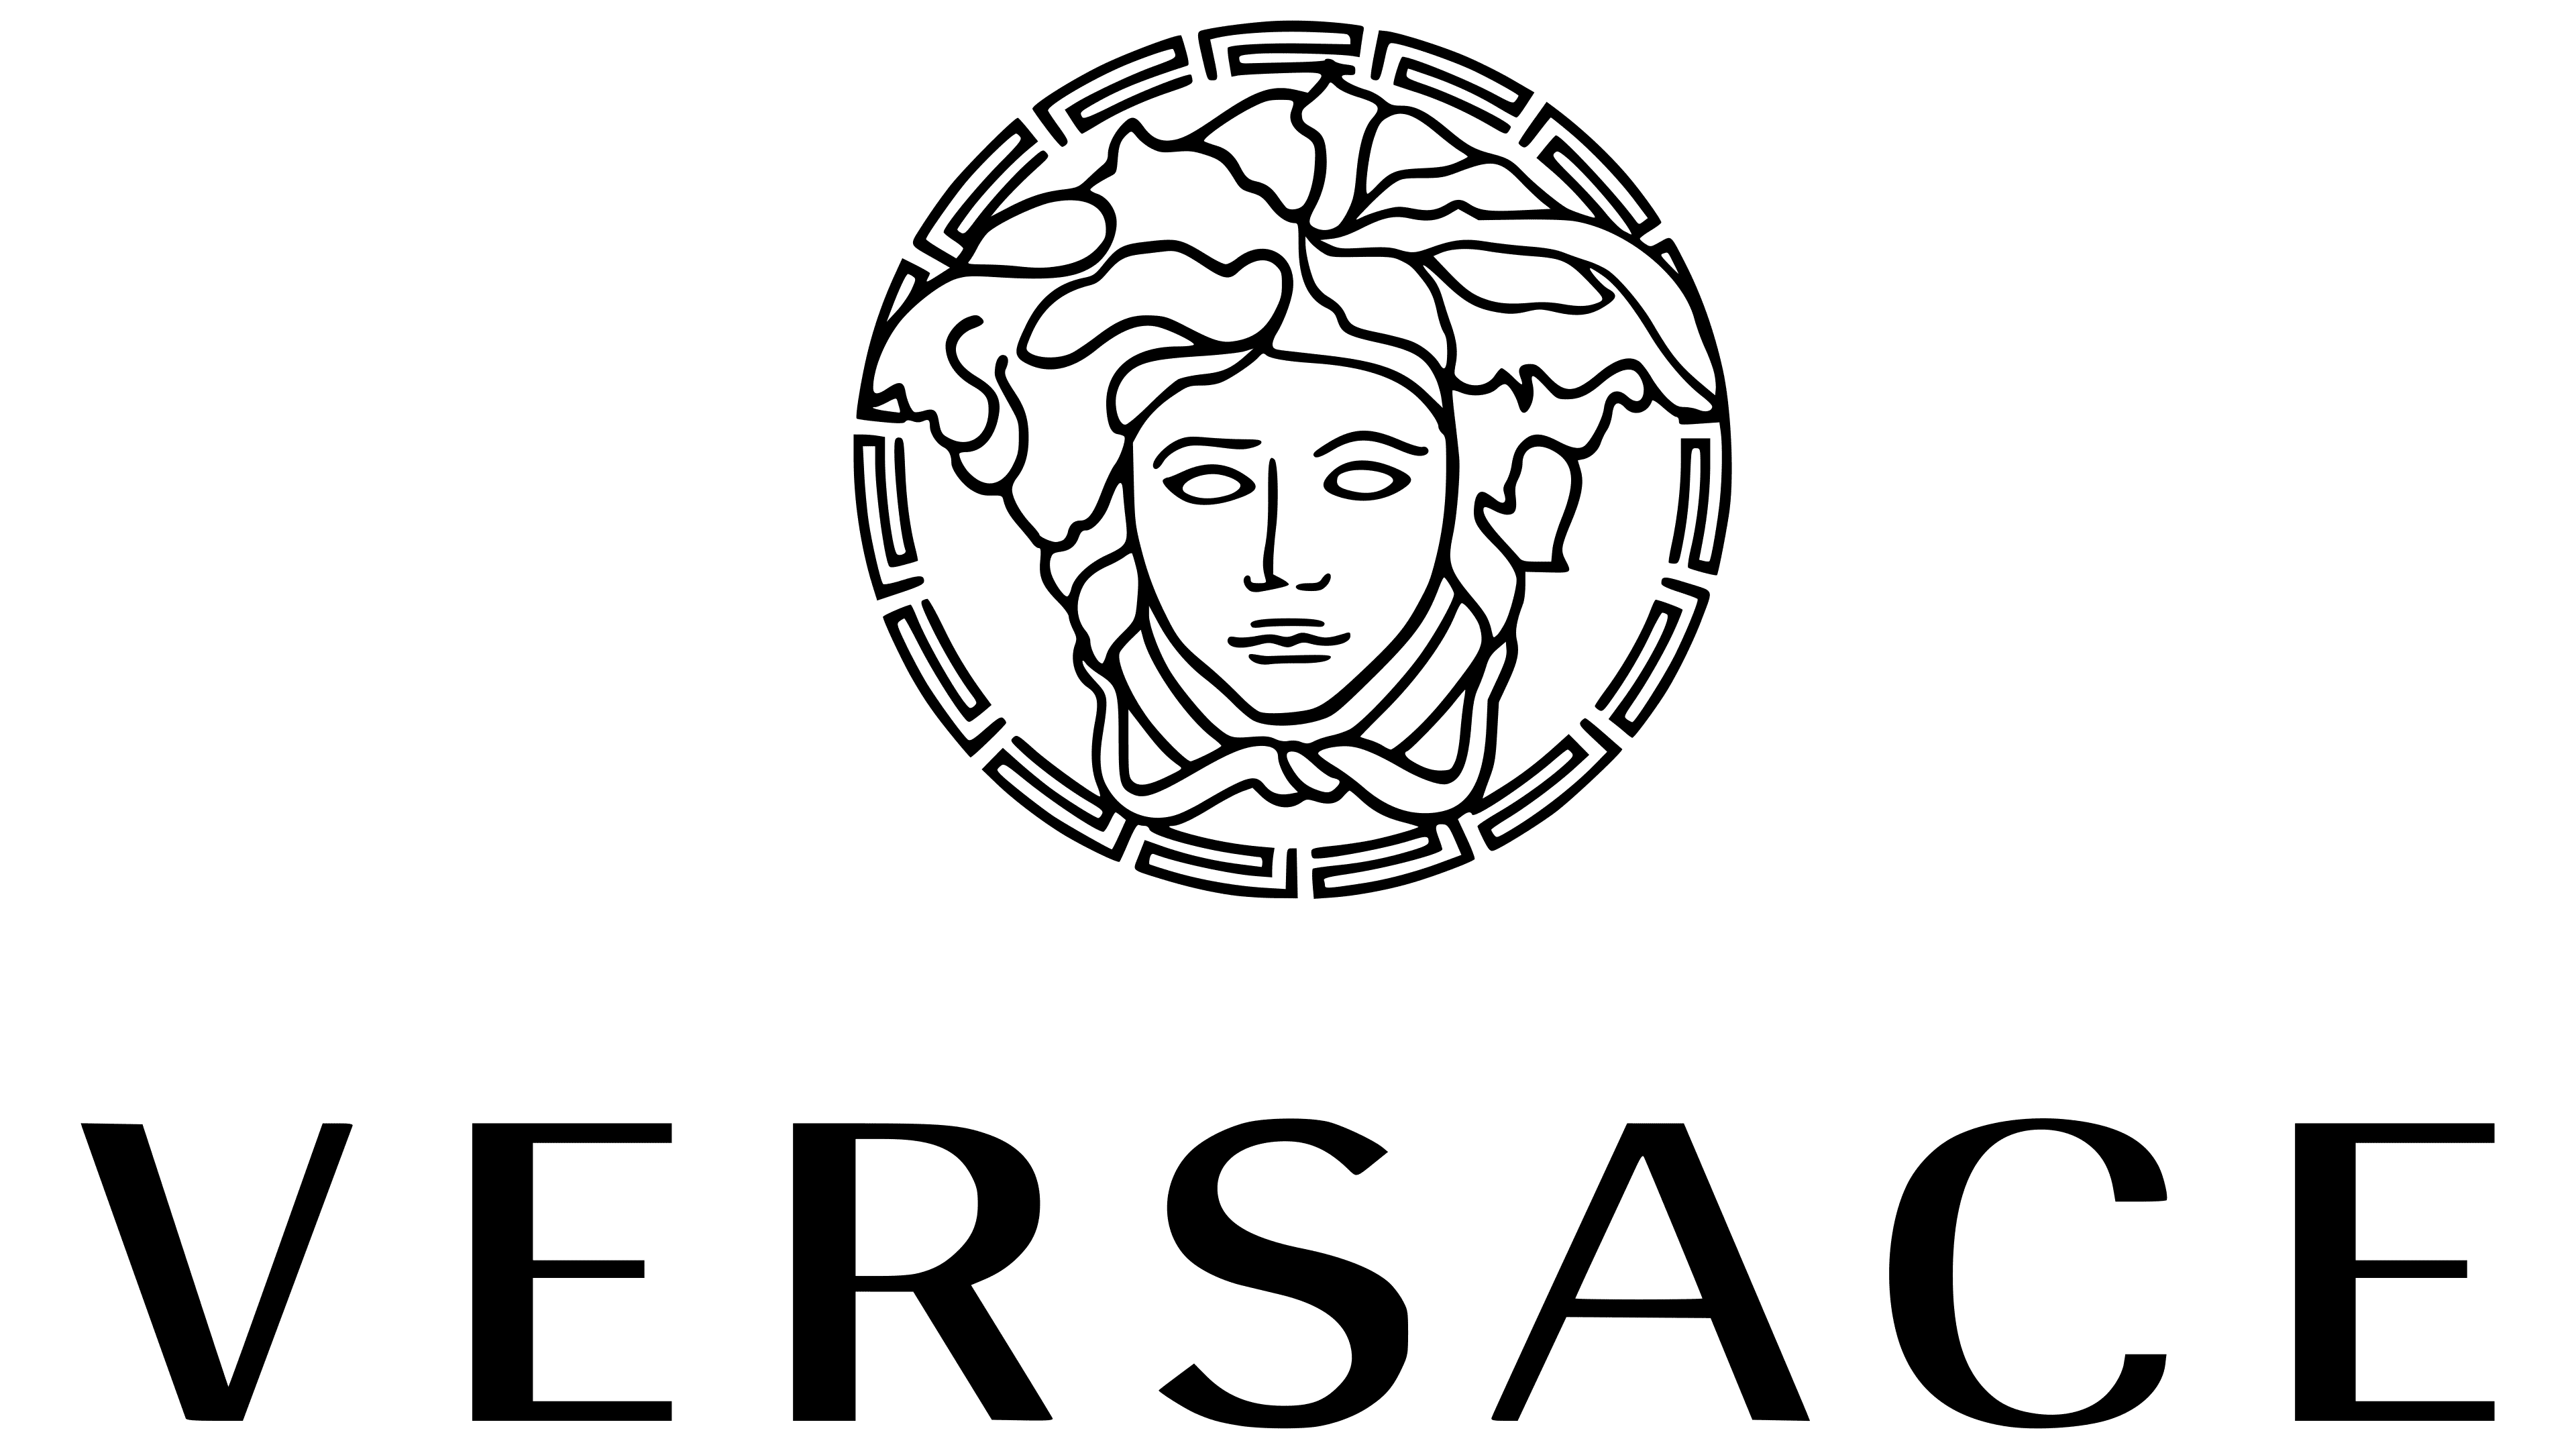 Simbolo De Versace | vlr.eng.br